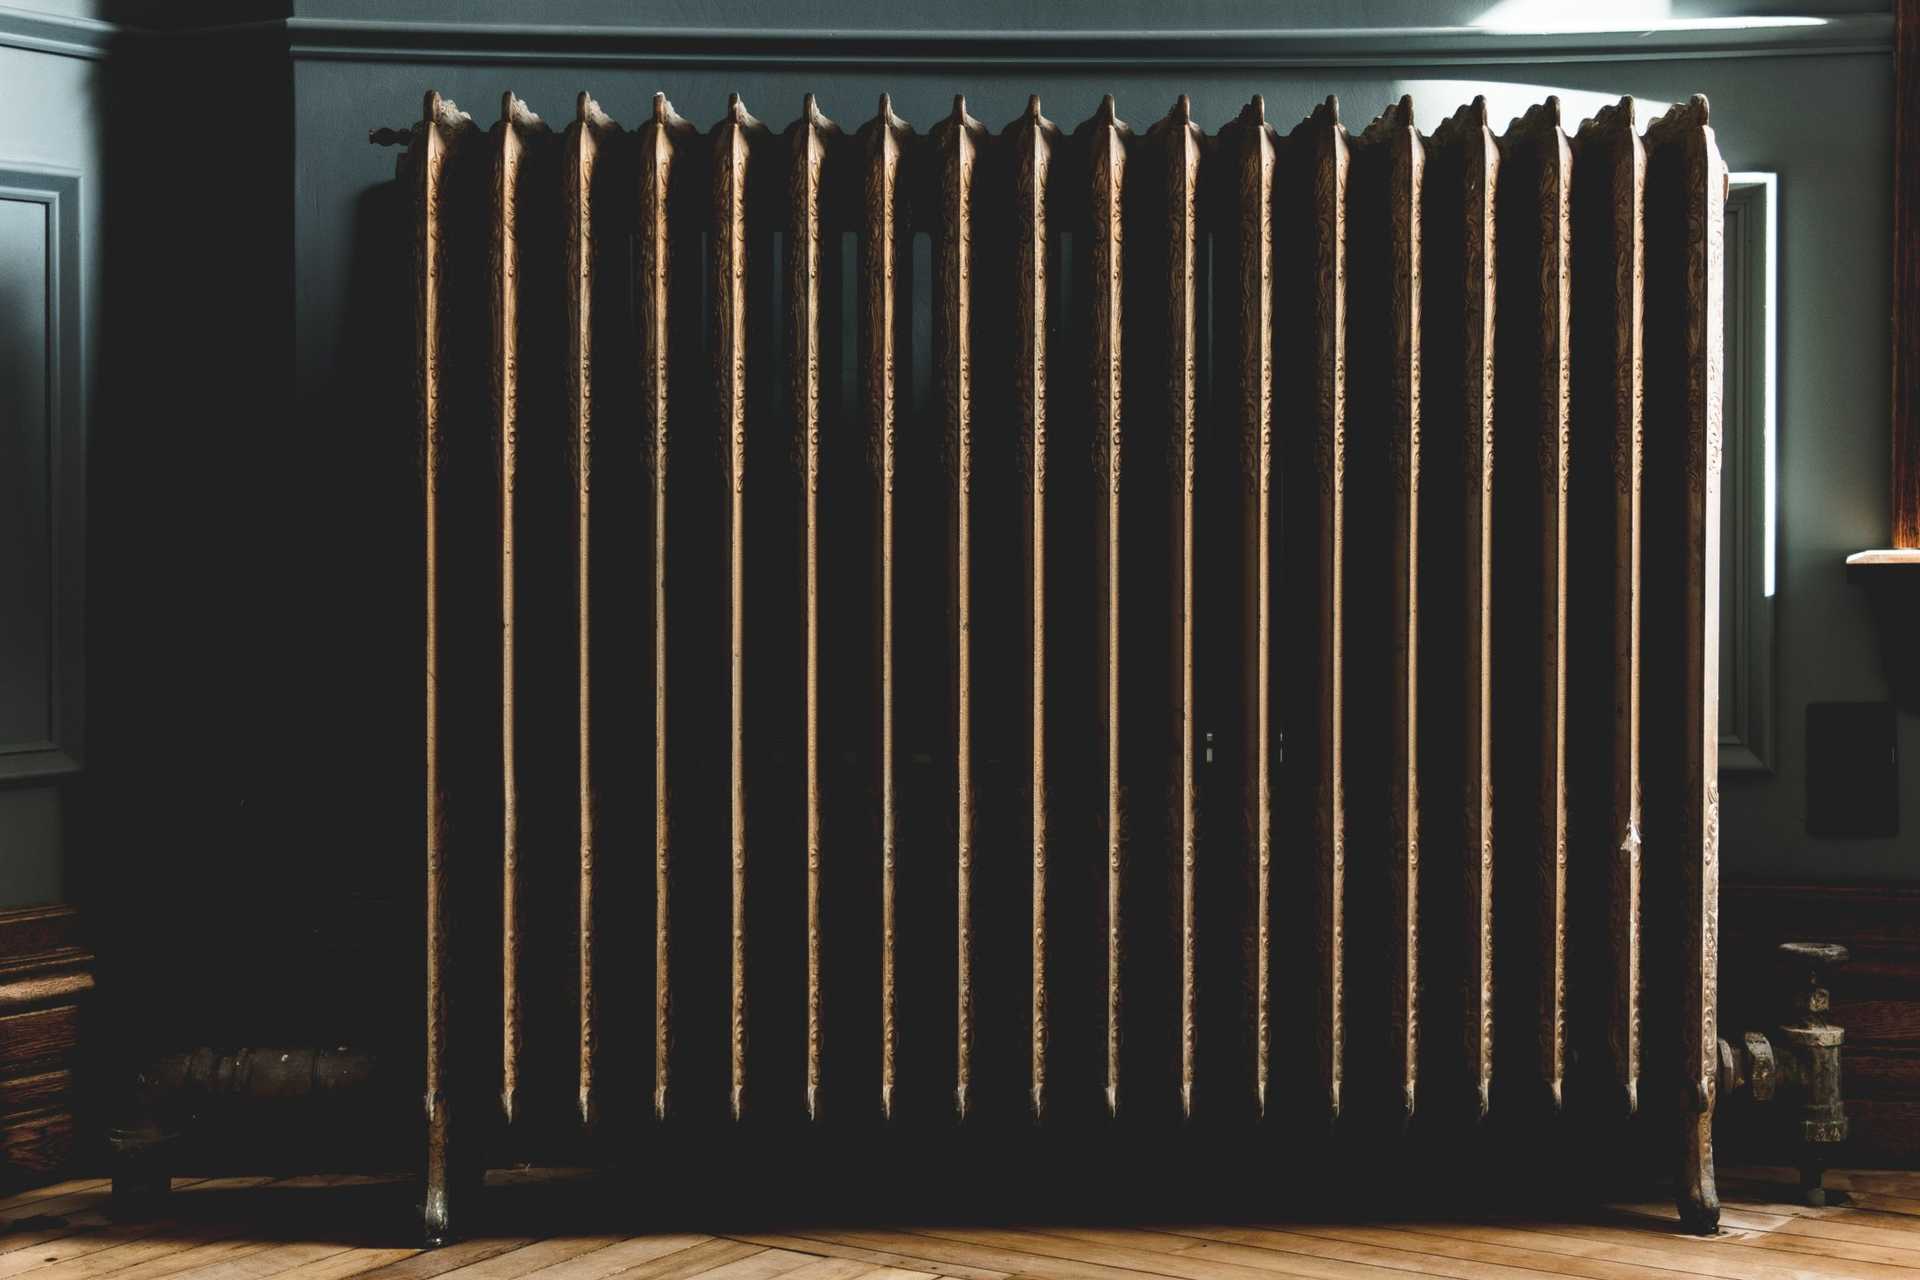 Vintage radiator at home